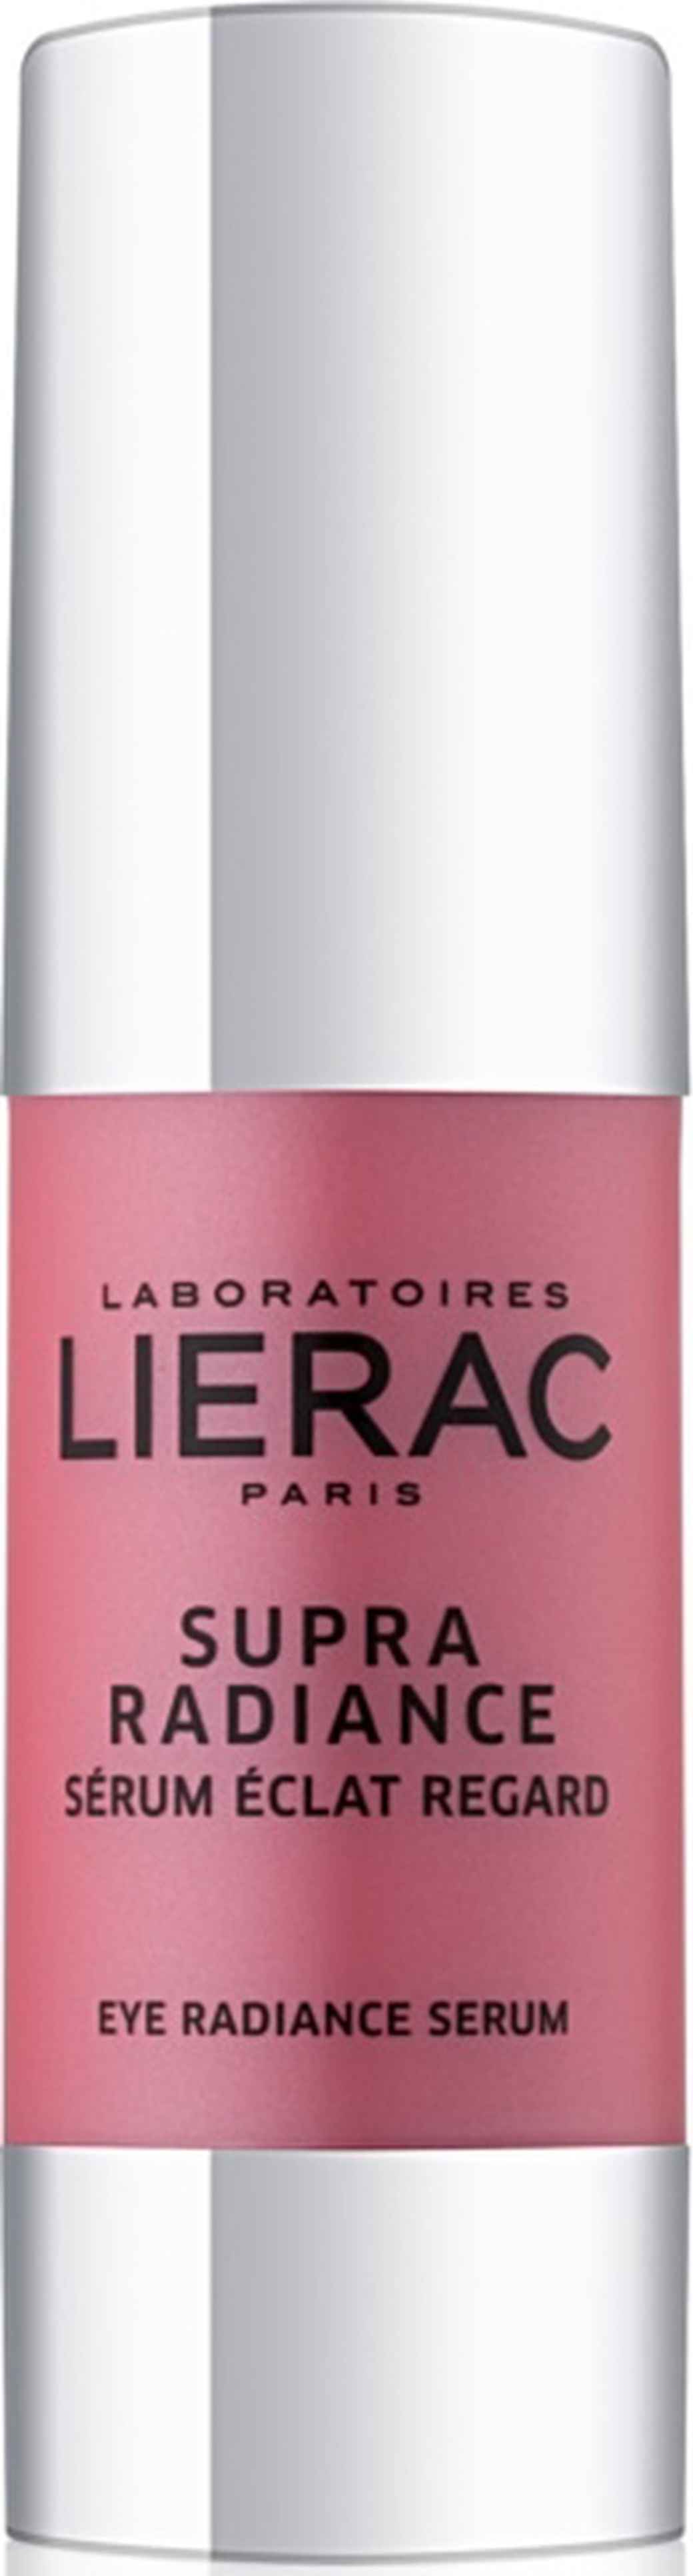 Lierac Supra Radiance сыворотка для сияния кожи контура глаз 15 мл фото